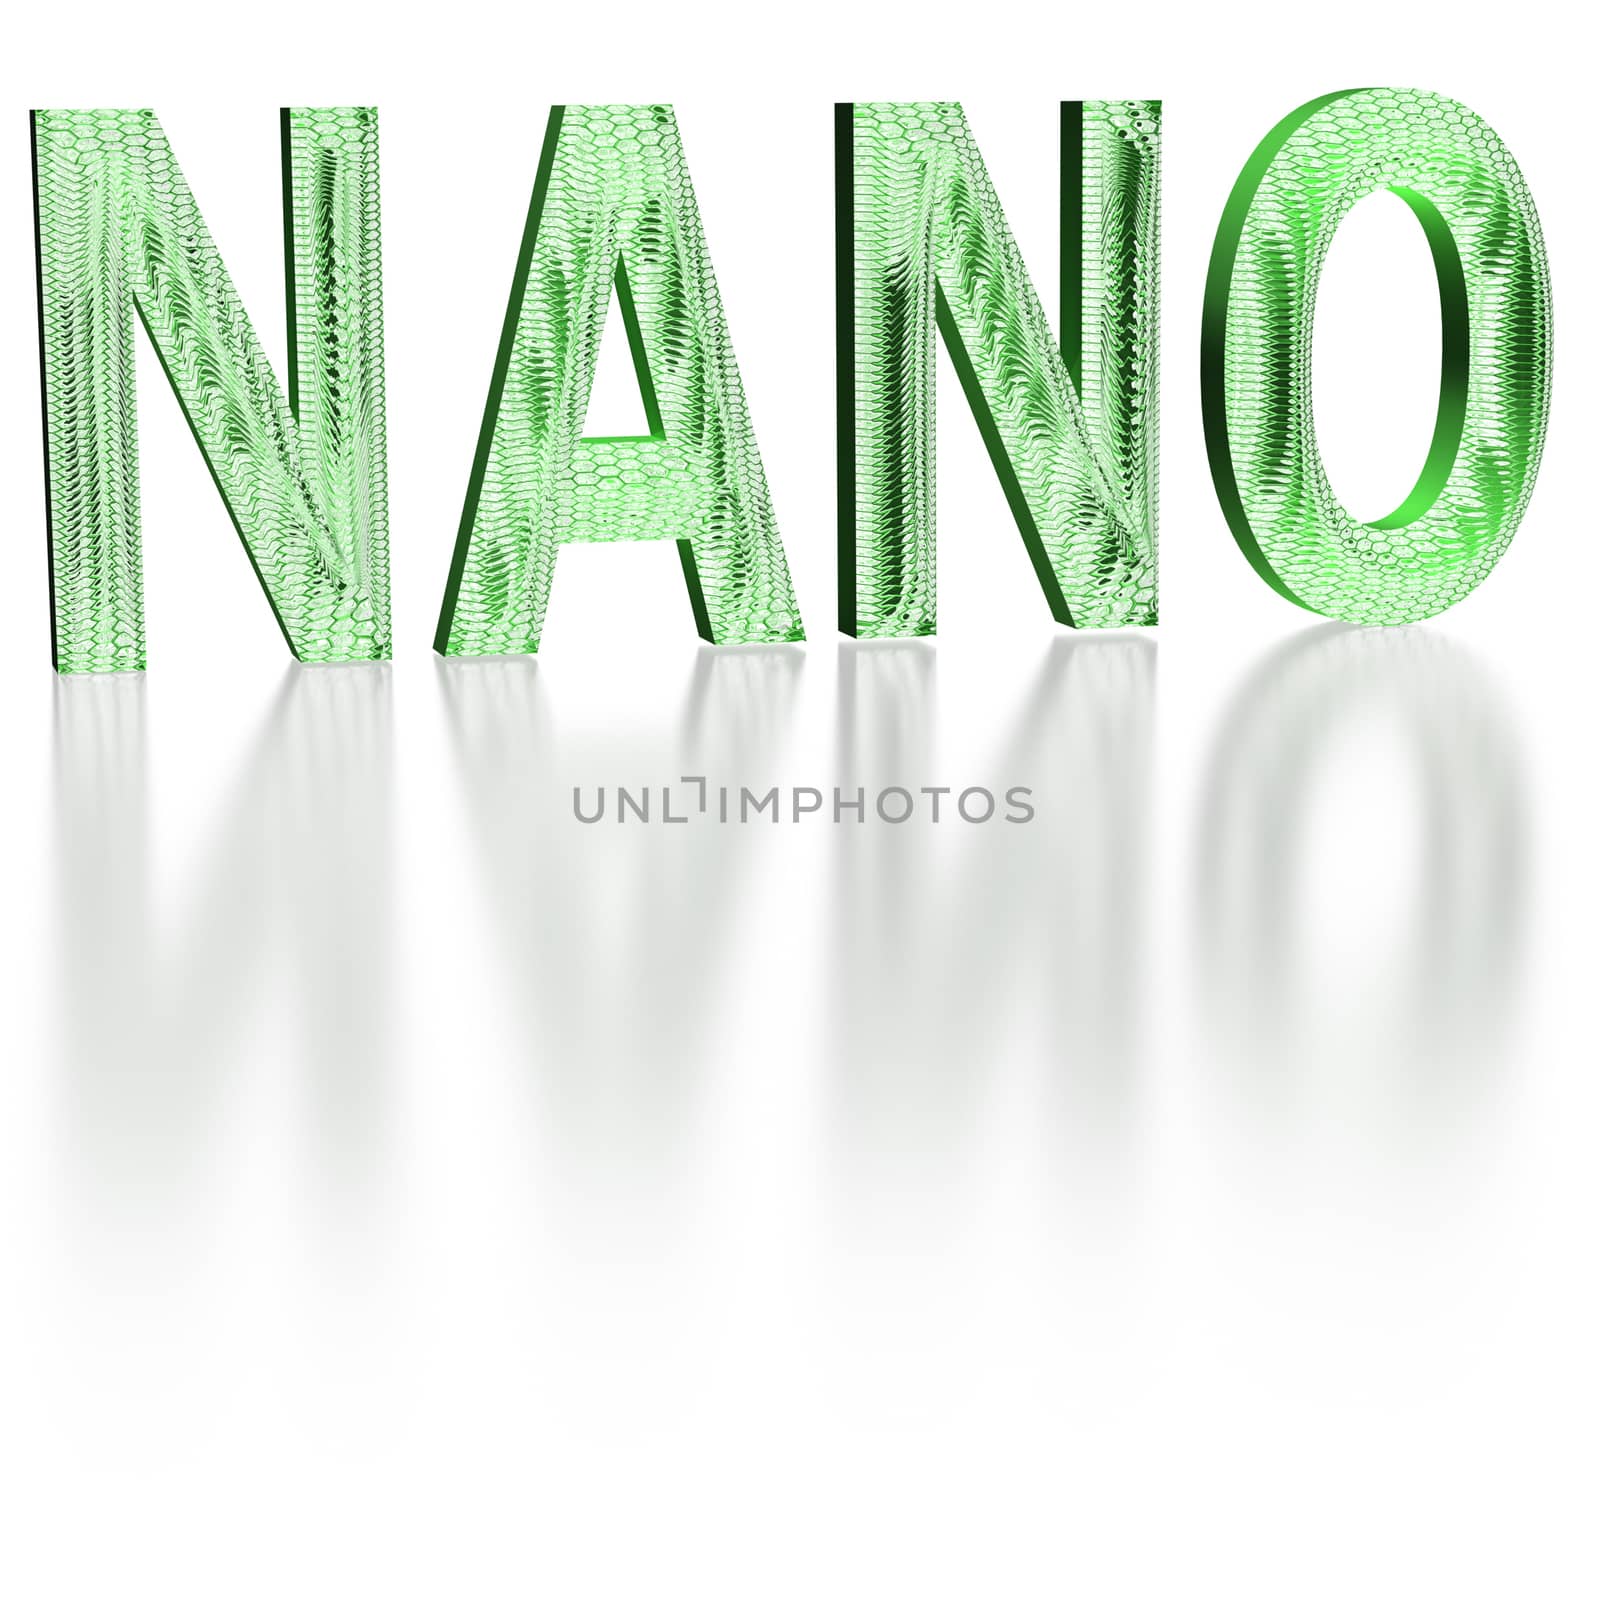 Three-dimensional inscription nano by richter1910